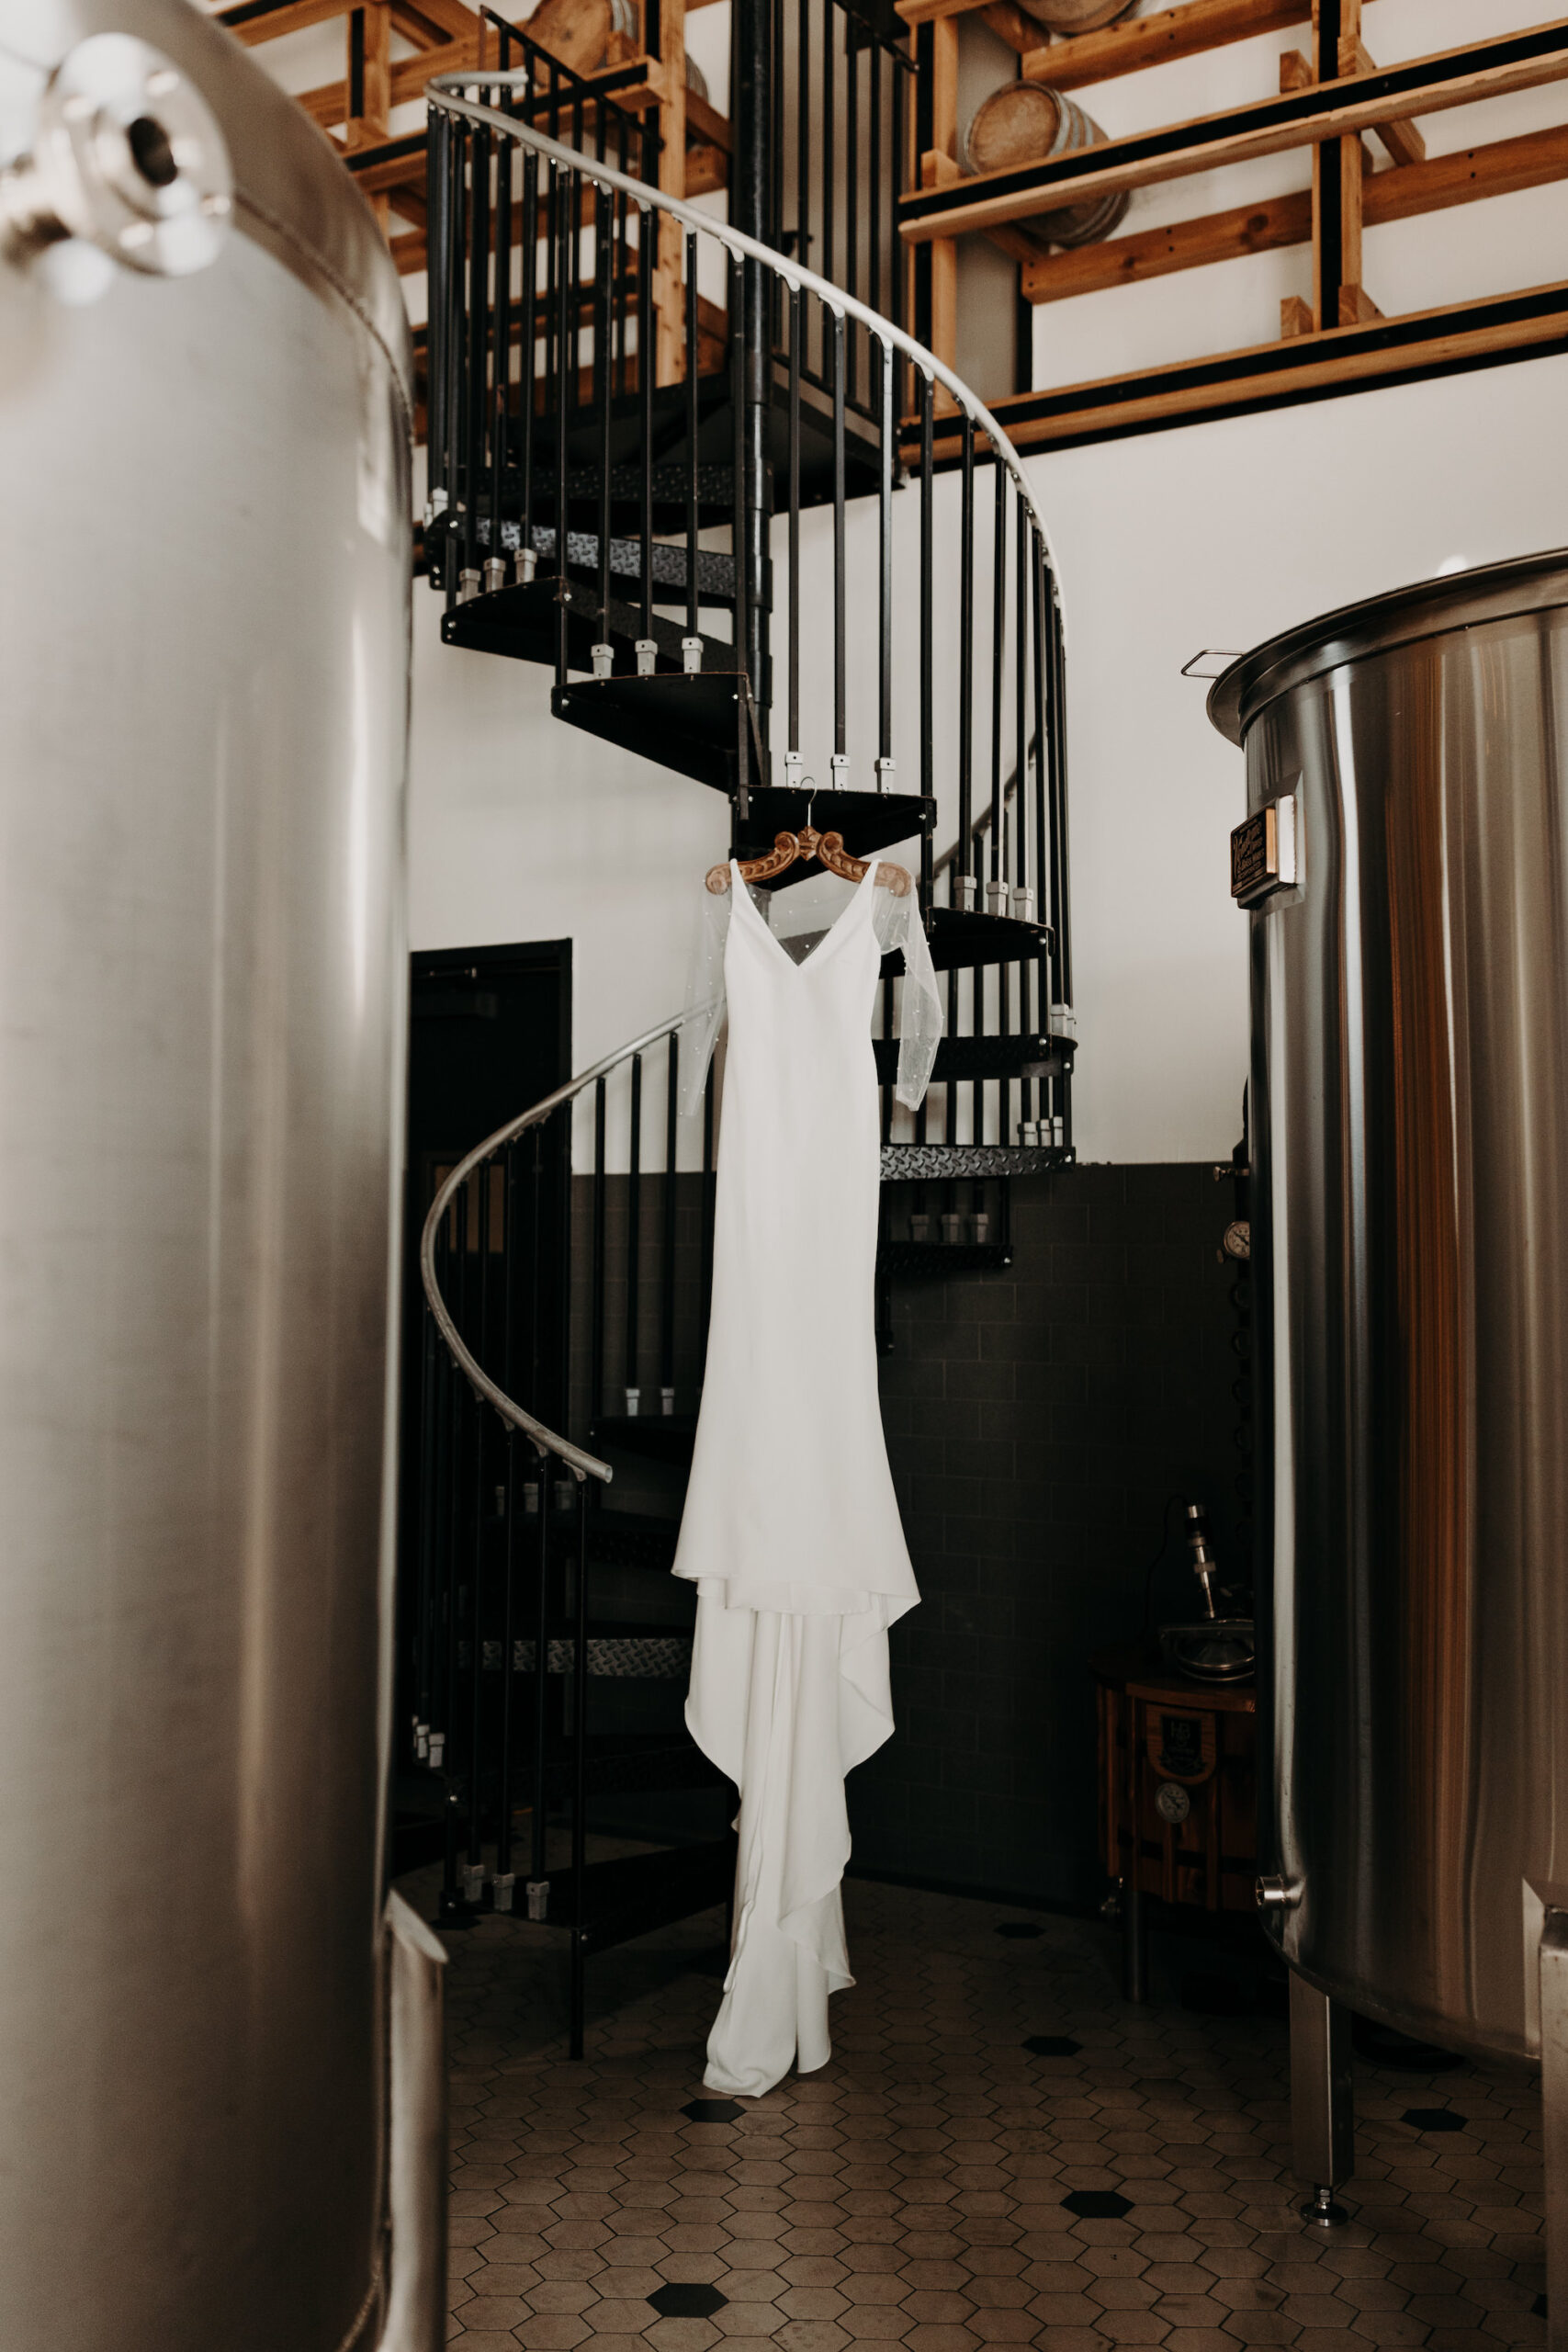 Sheer Long Sleeve Detailed Wedding Dress with Sleek Fit on Hanger in Industrial Building Wedding Portrait | Tampa Venue Urban Stillhouse